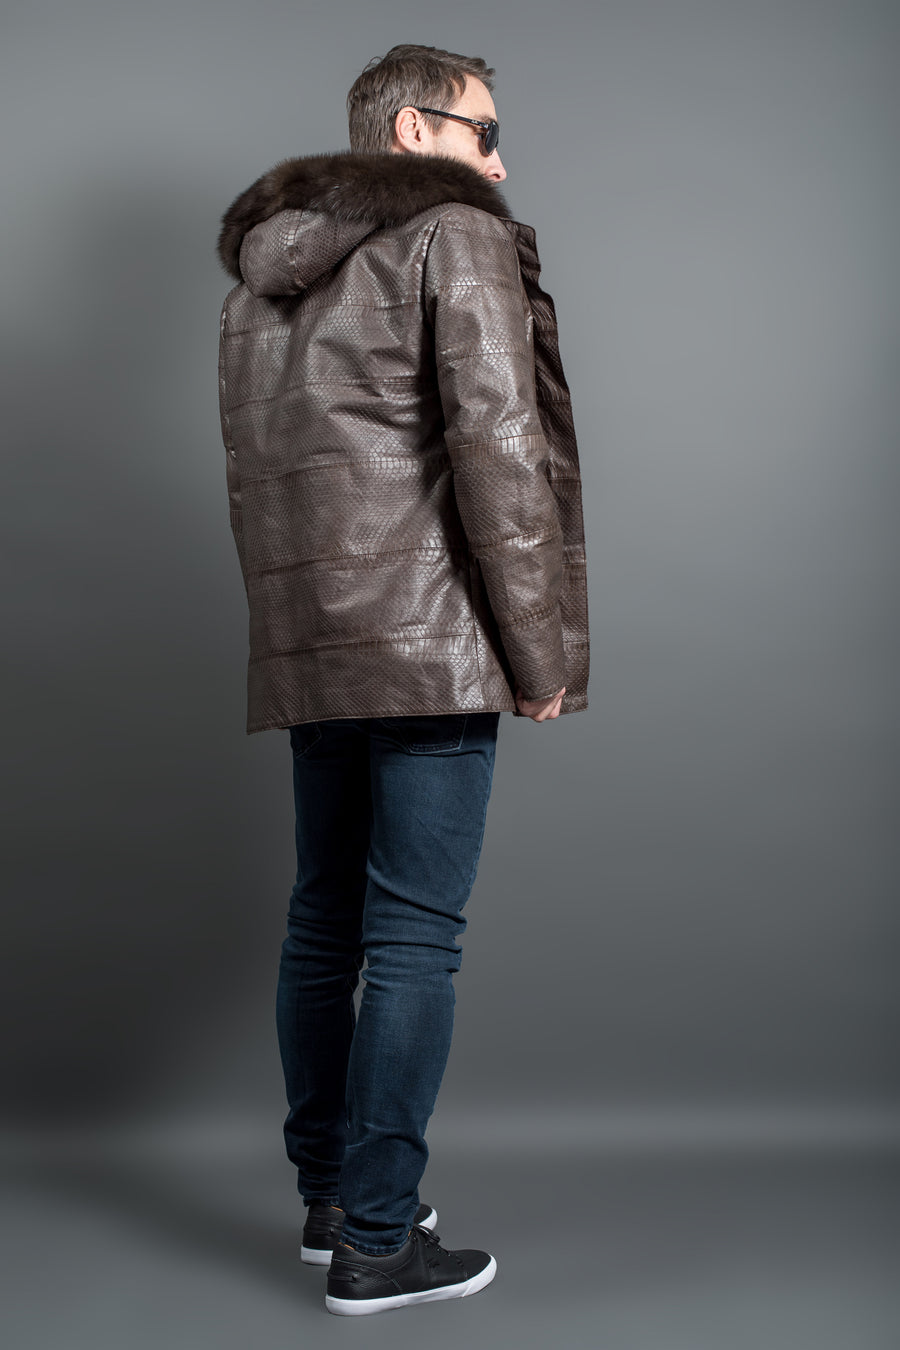 Luxury Python leather and sable fur jacket